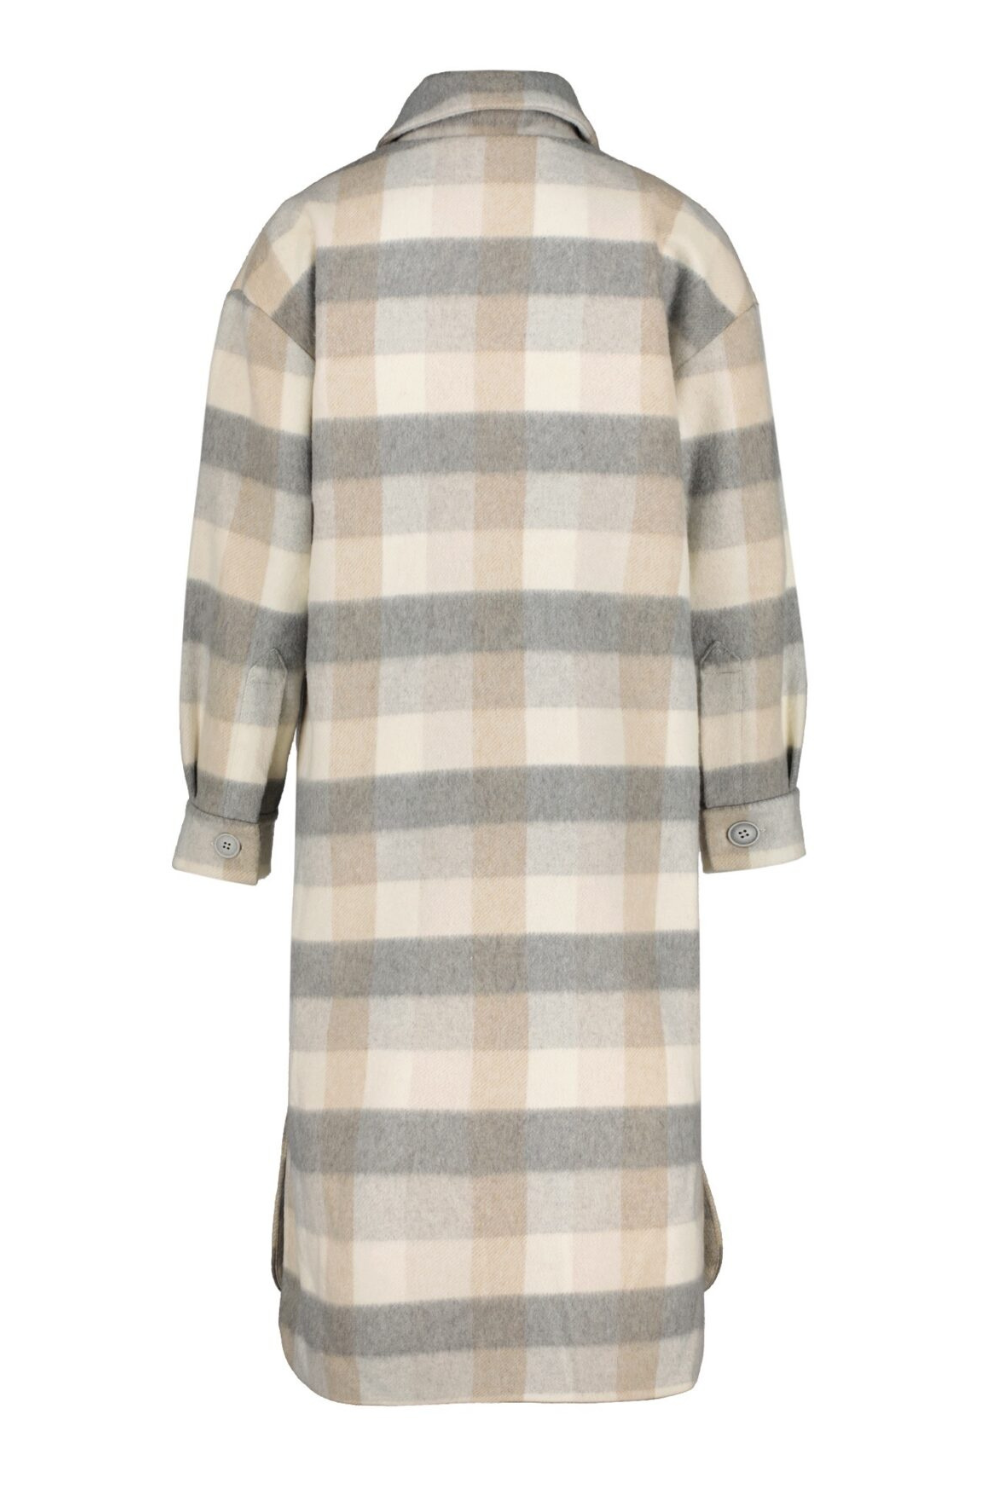 Shirt-coat in gray-beige checkered color (Mon Cheri)